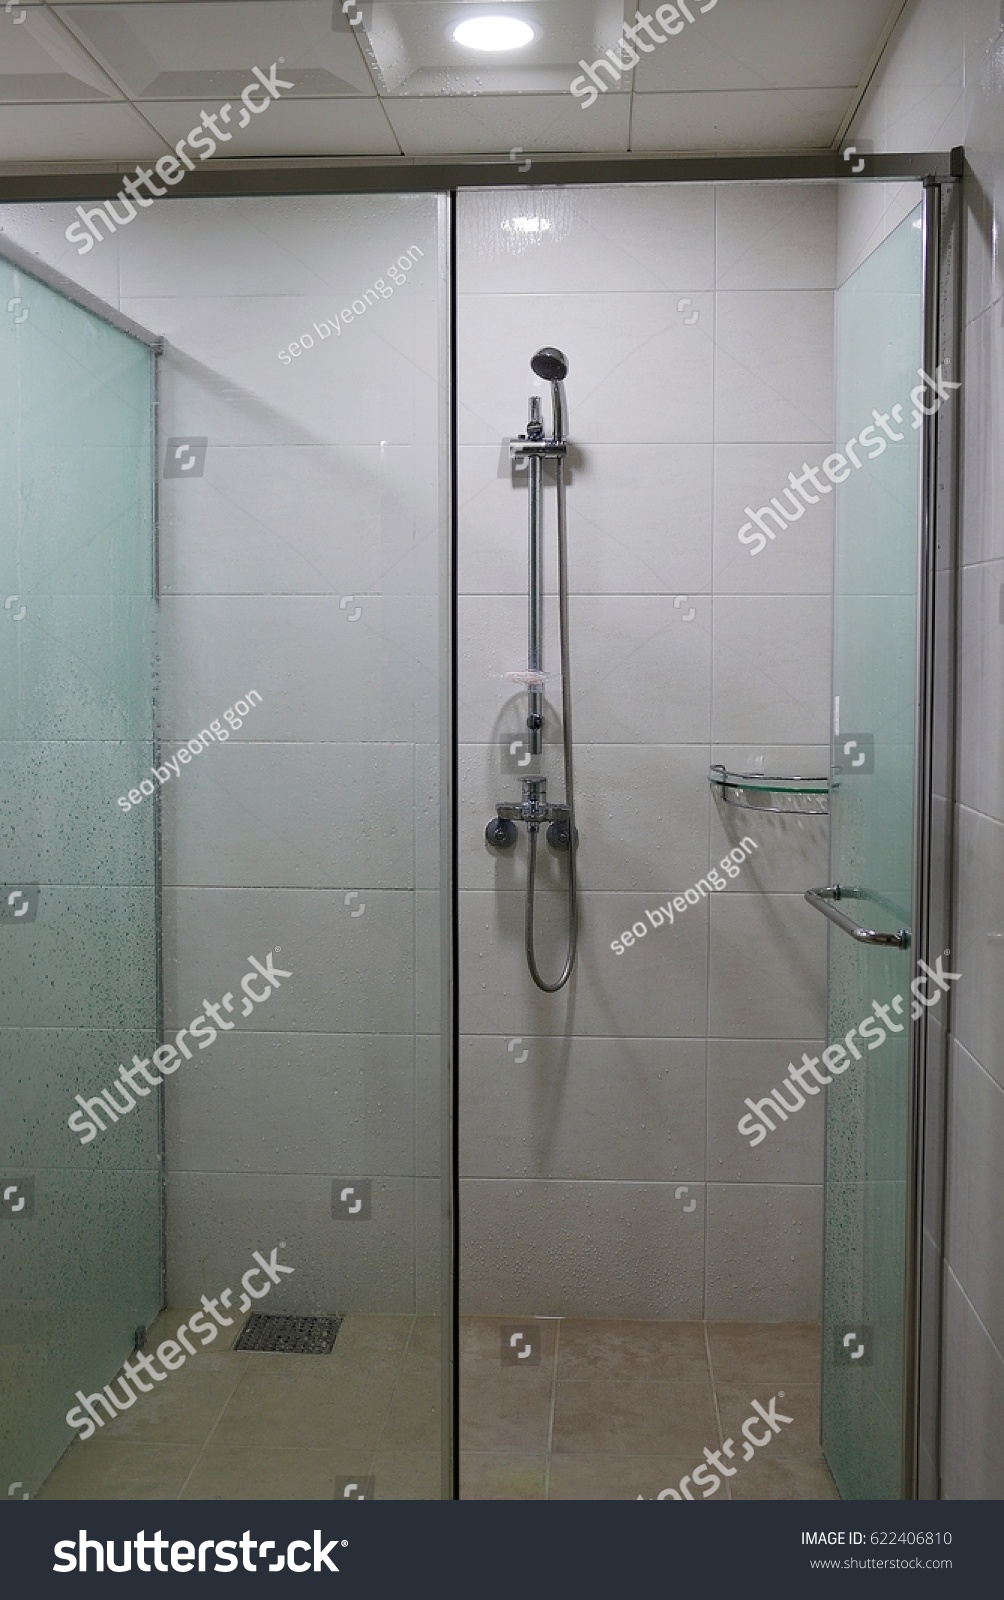 Korea Shower Room Stock Photo 622406810